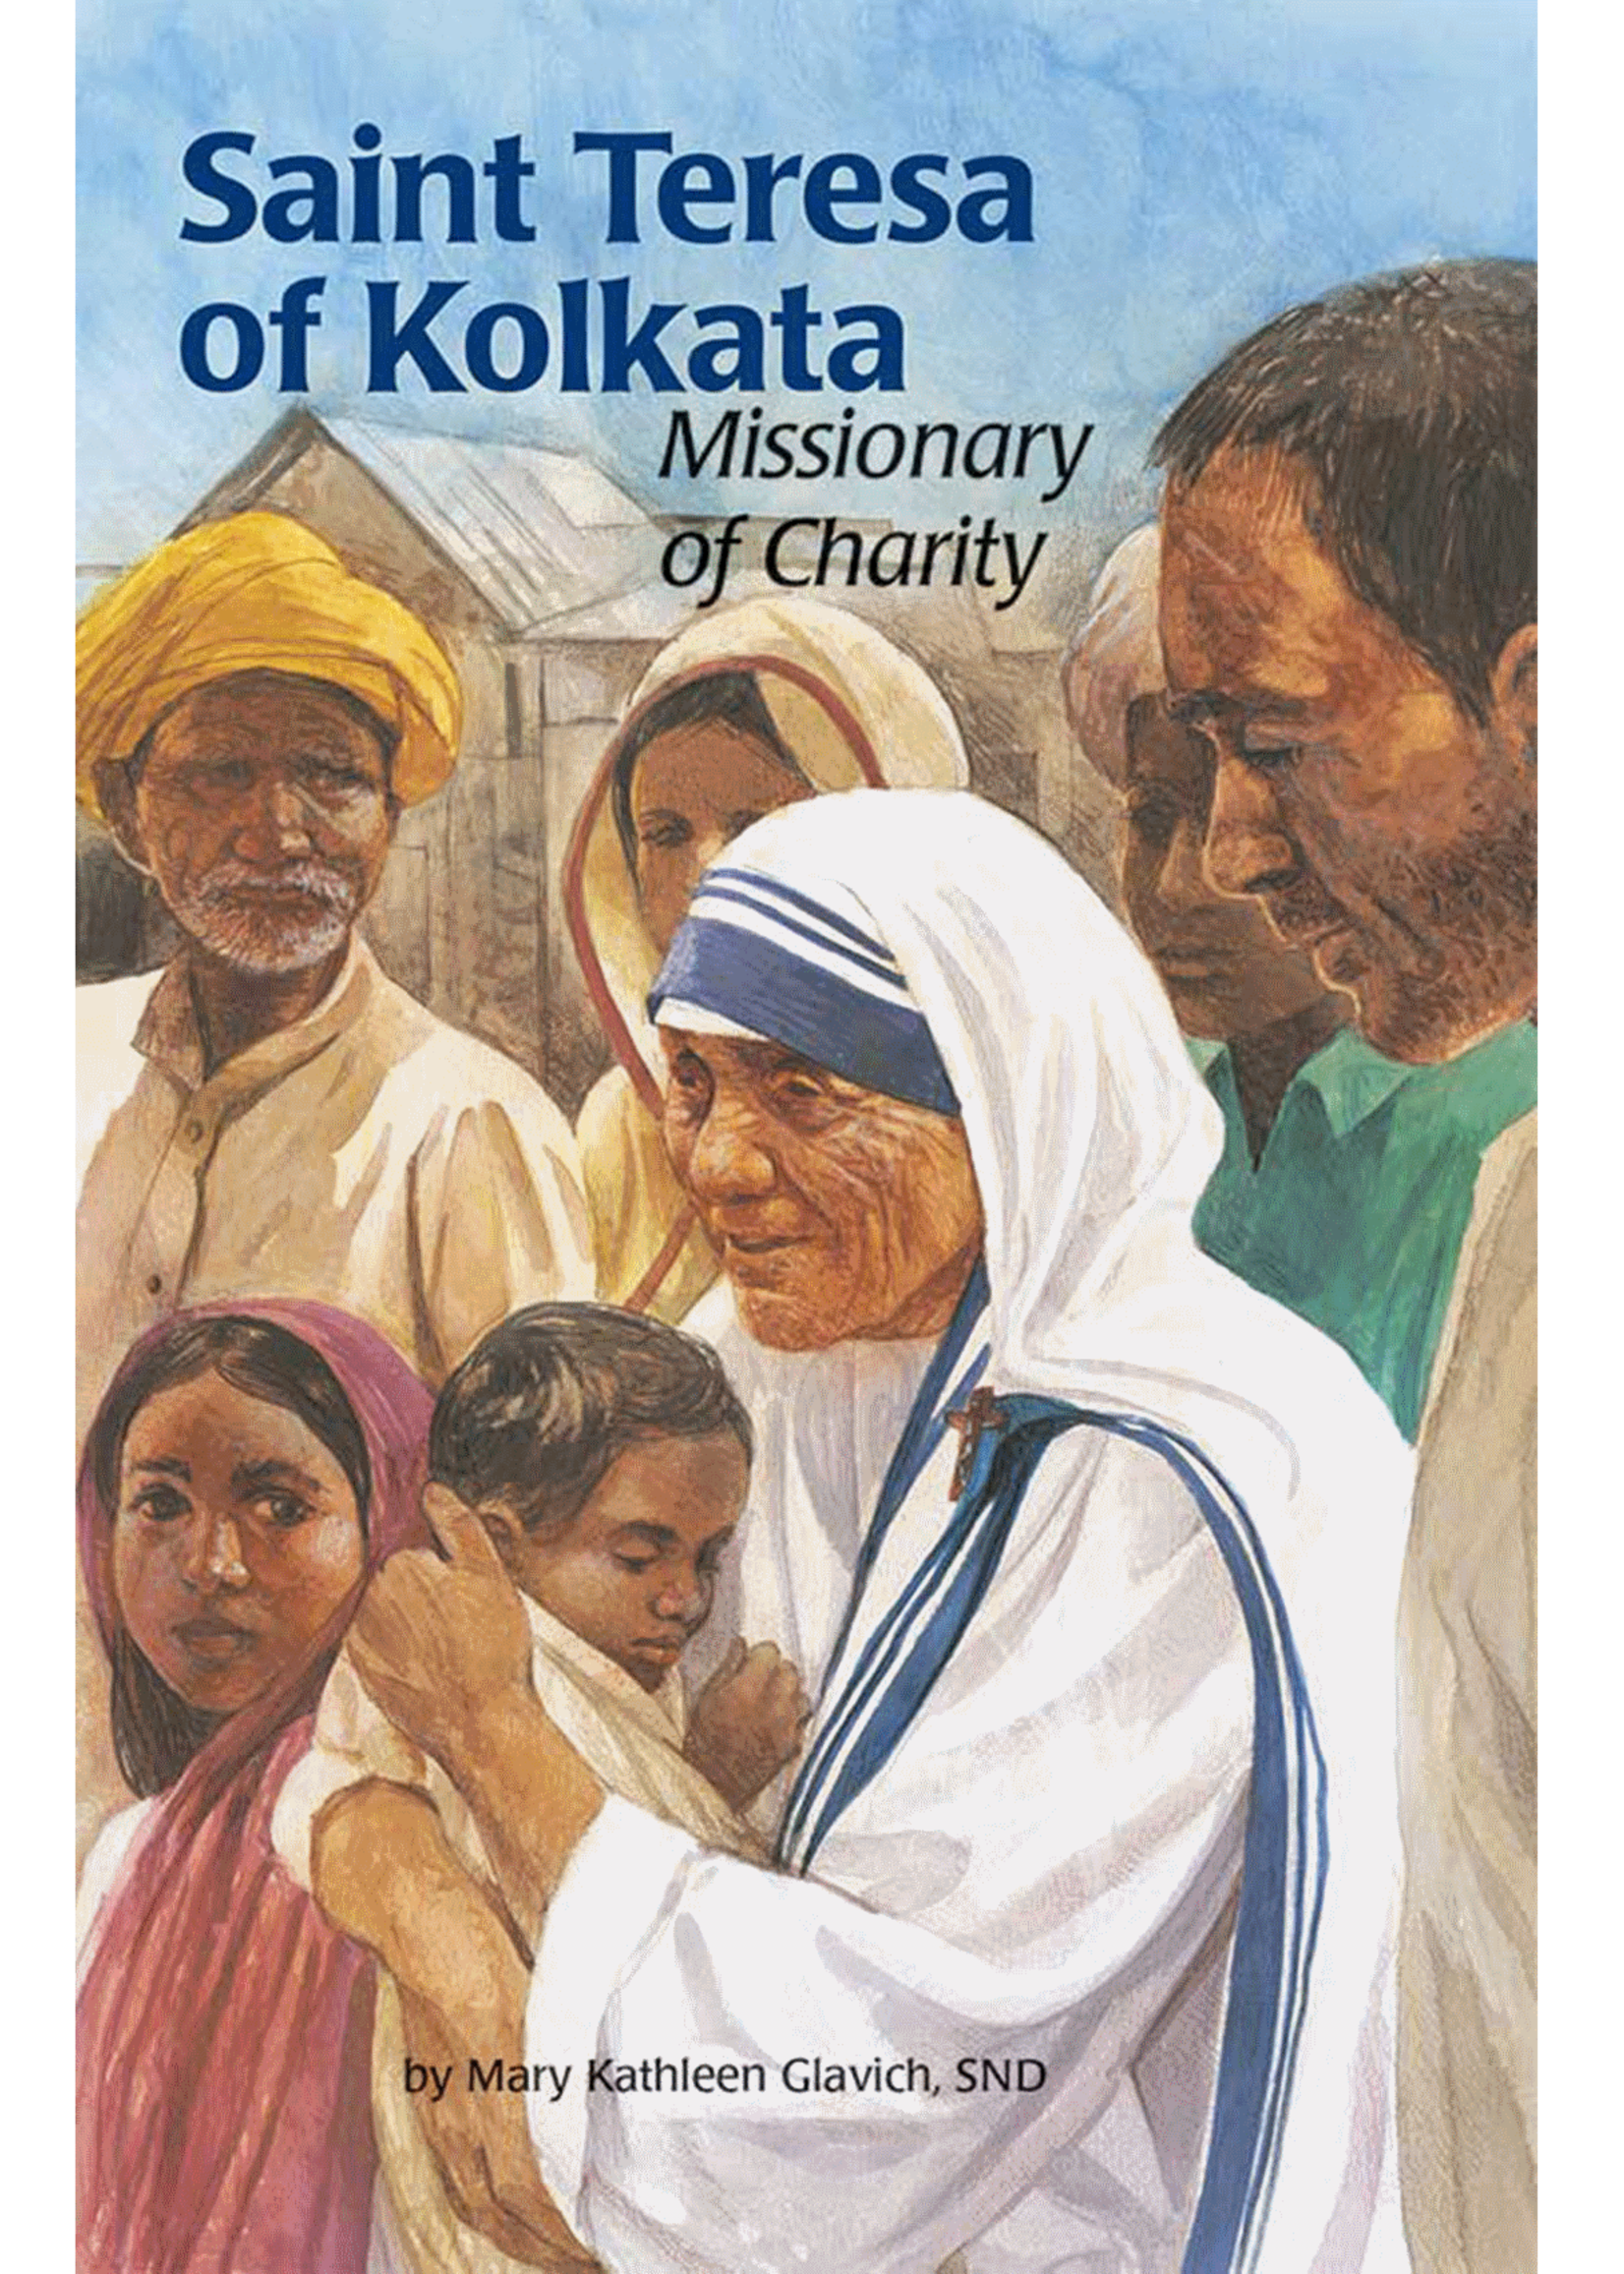 Encounter the Saints Saint Teresa of Calcutta/Kolkata, Missionary of Charity